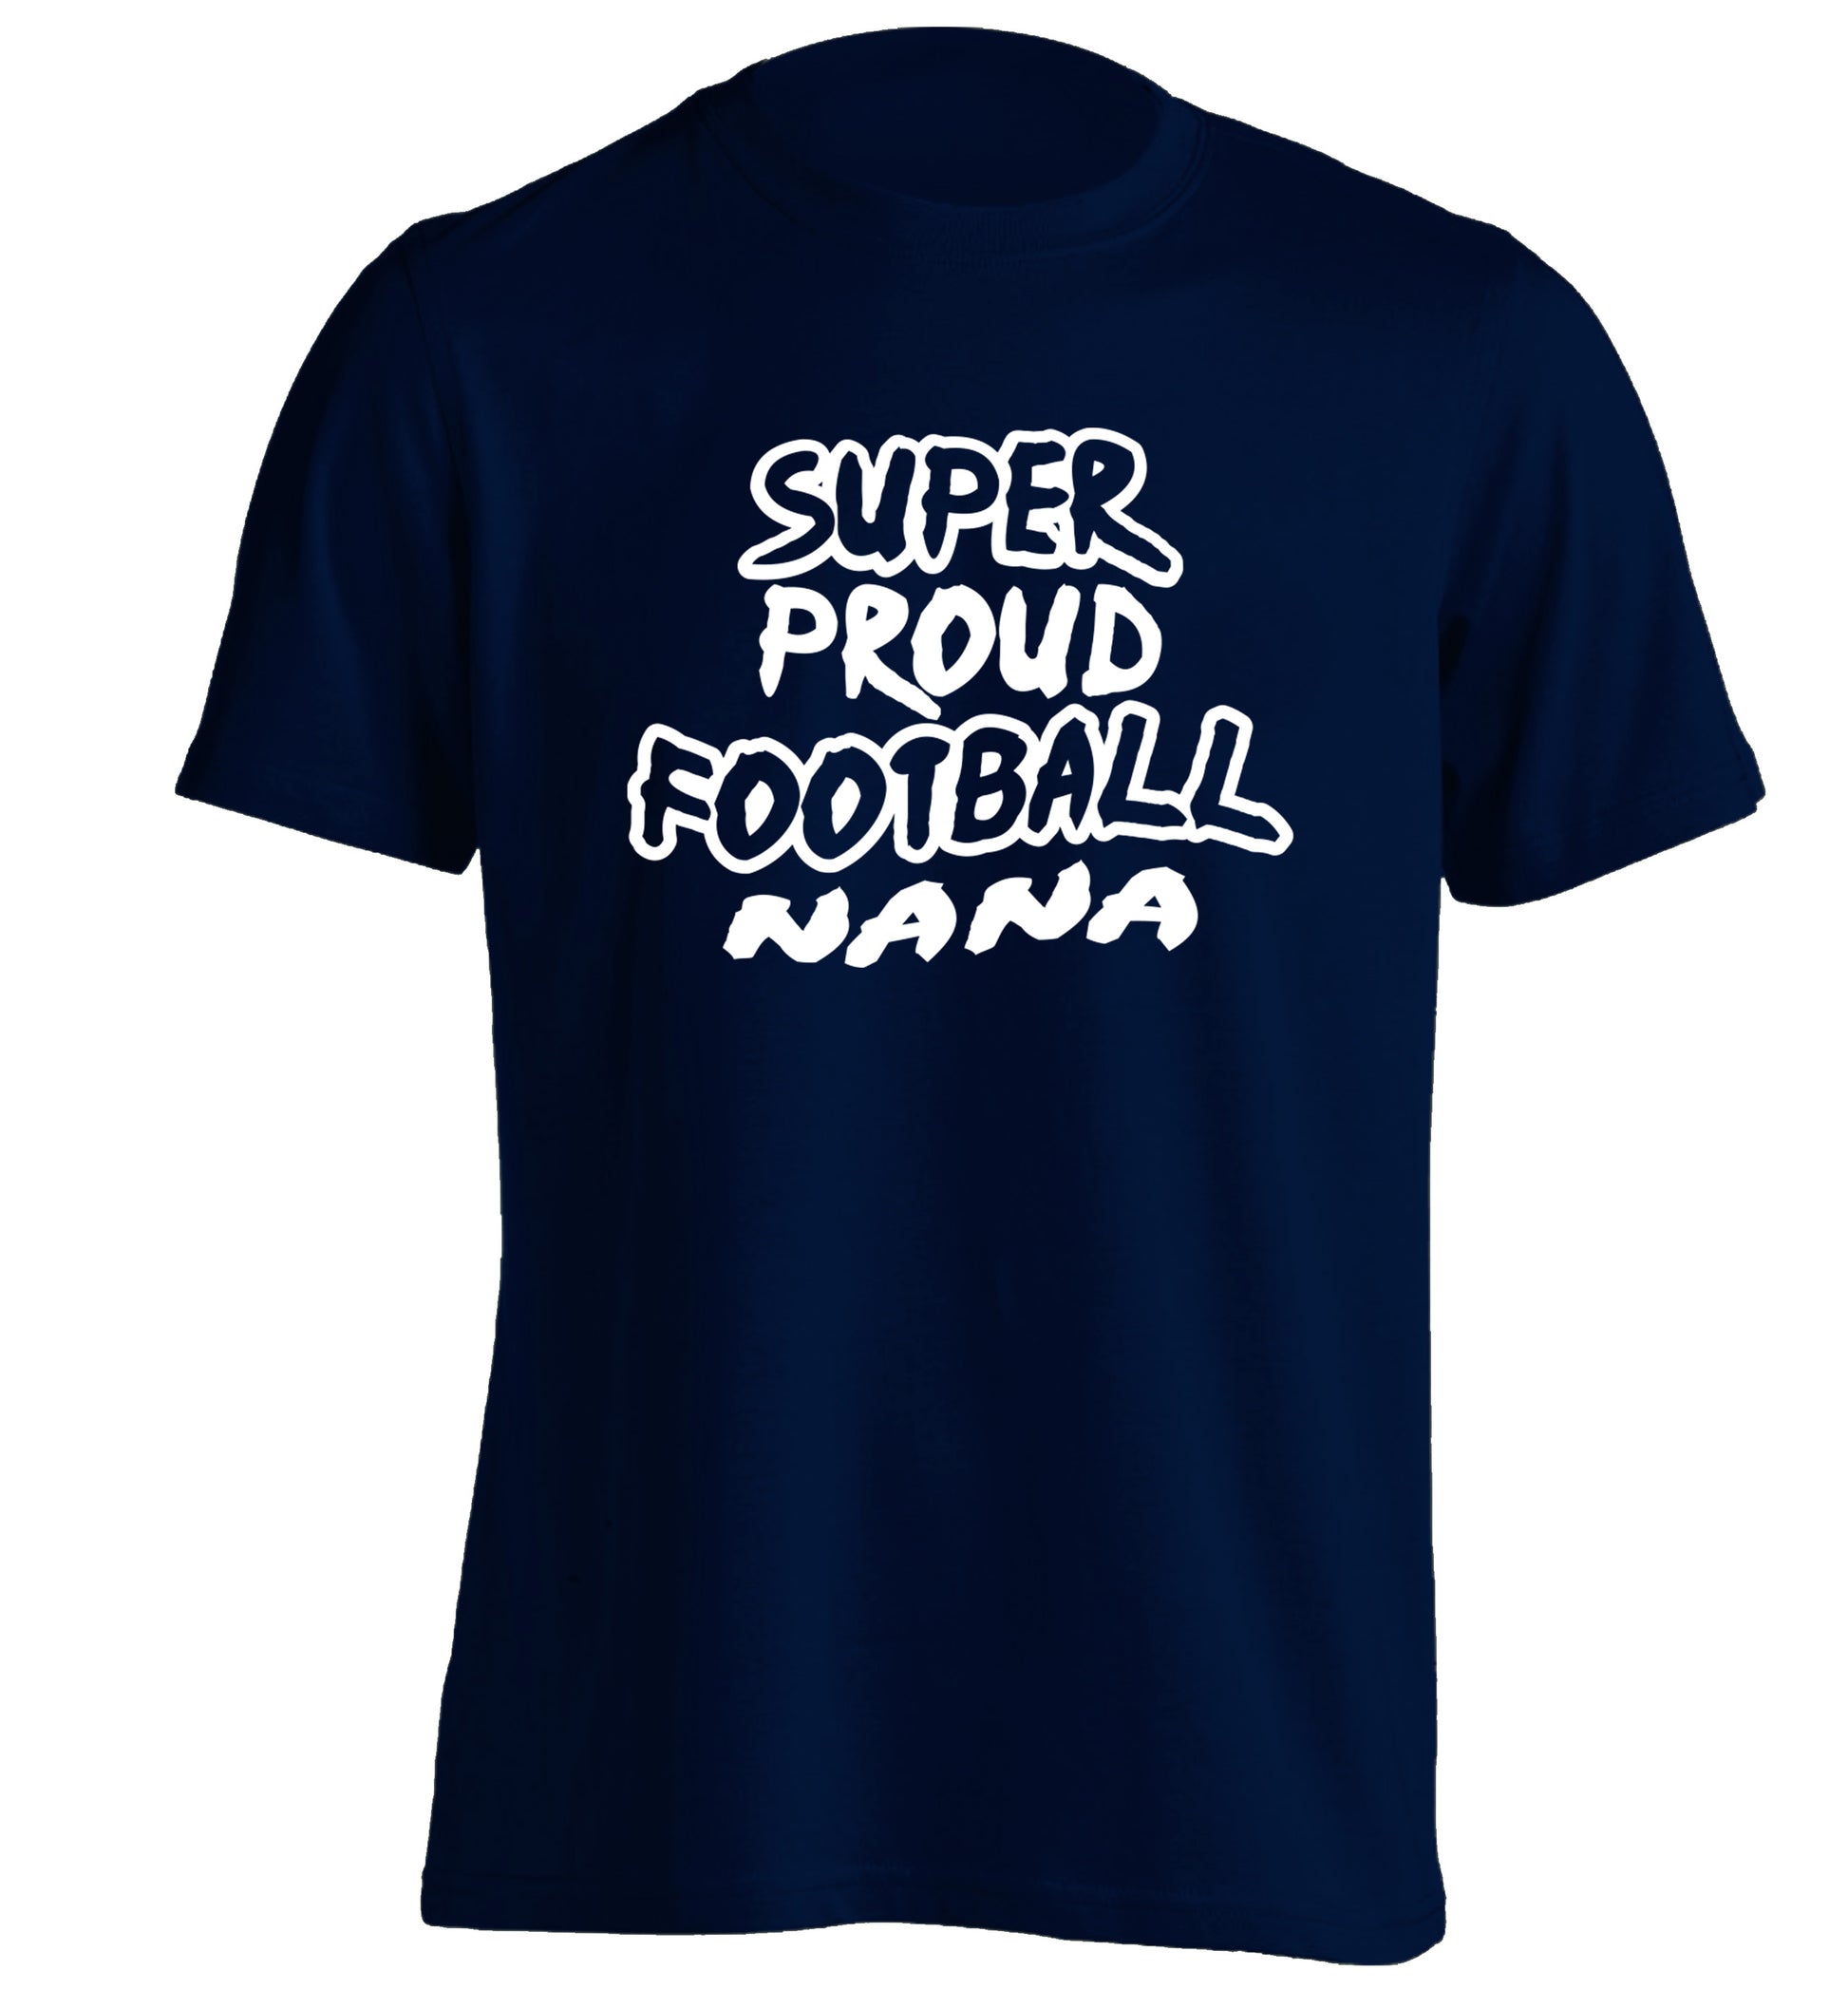 Super proud football nana adults unisexnavy Tshirt 2XL